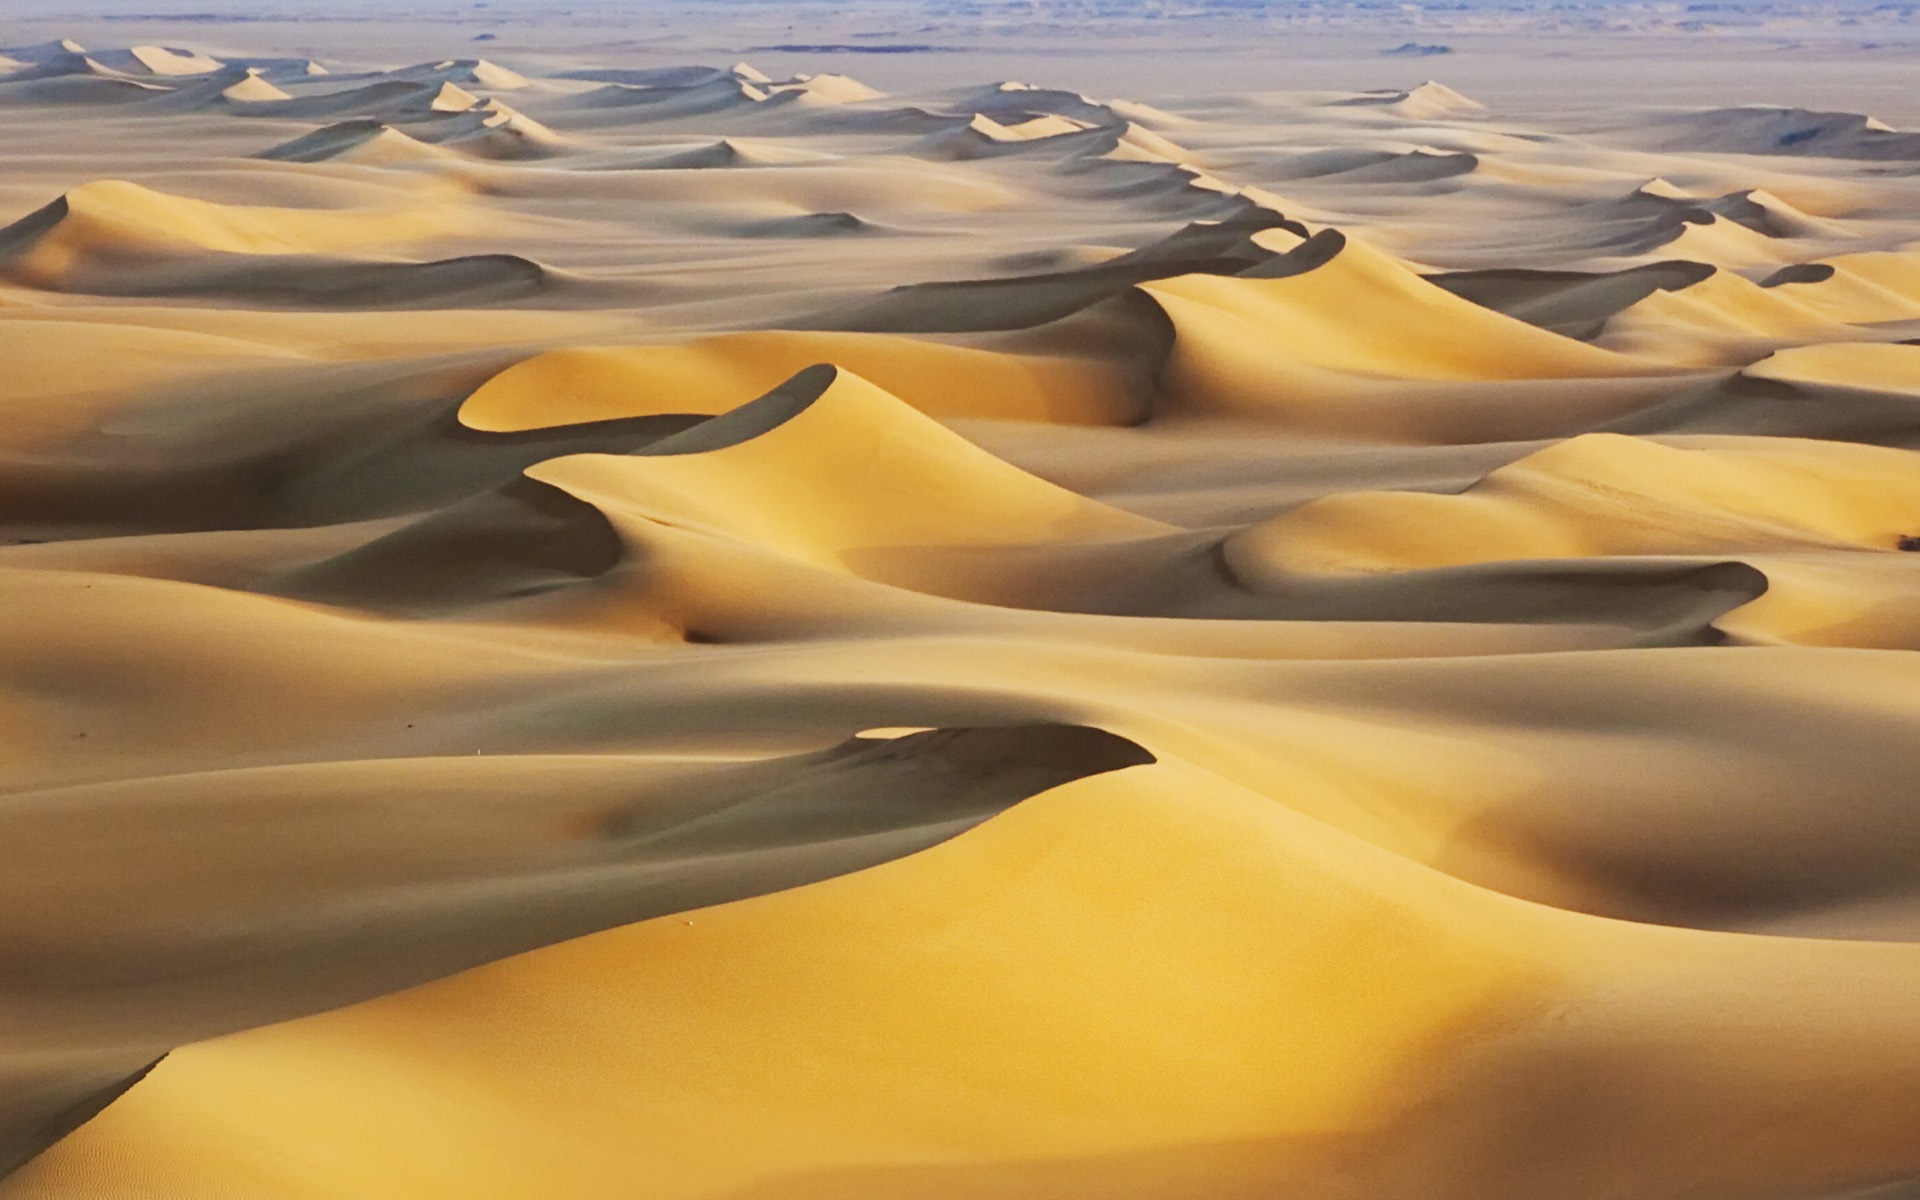 Desiertos calientes y áridas, de Windows 8 fondos de pantalla de pantalla ancha panorámica #4 - 1920x1200